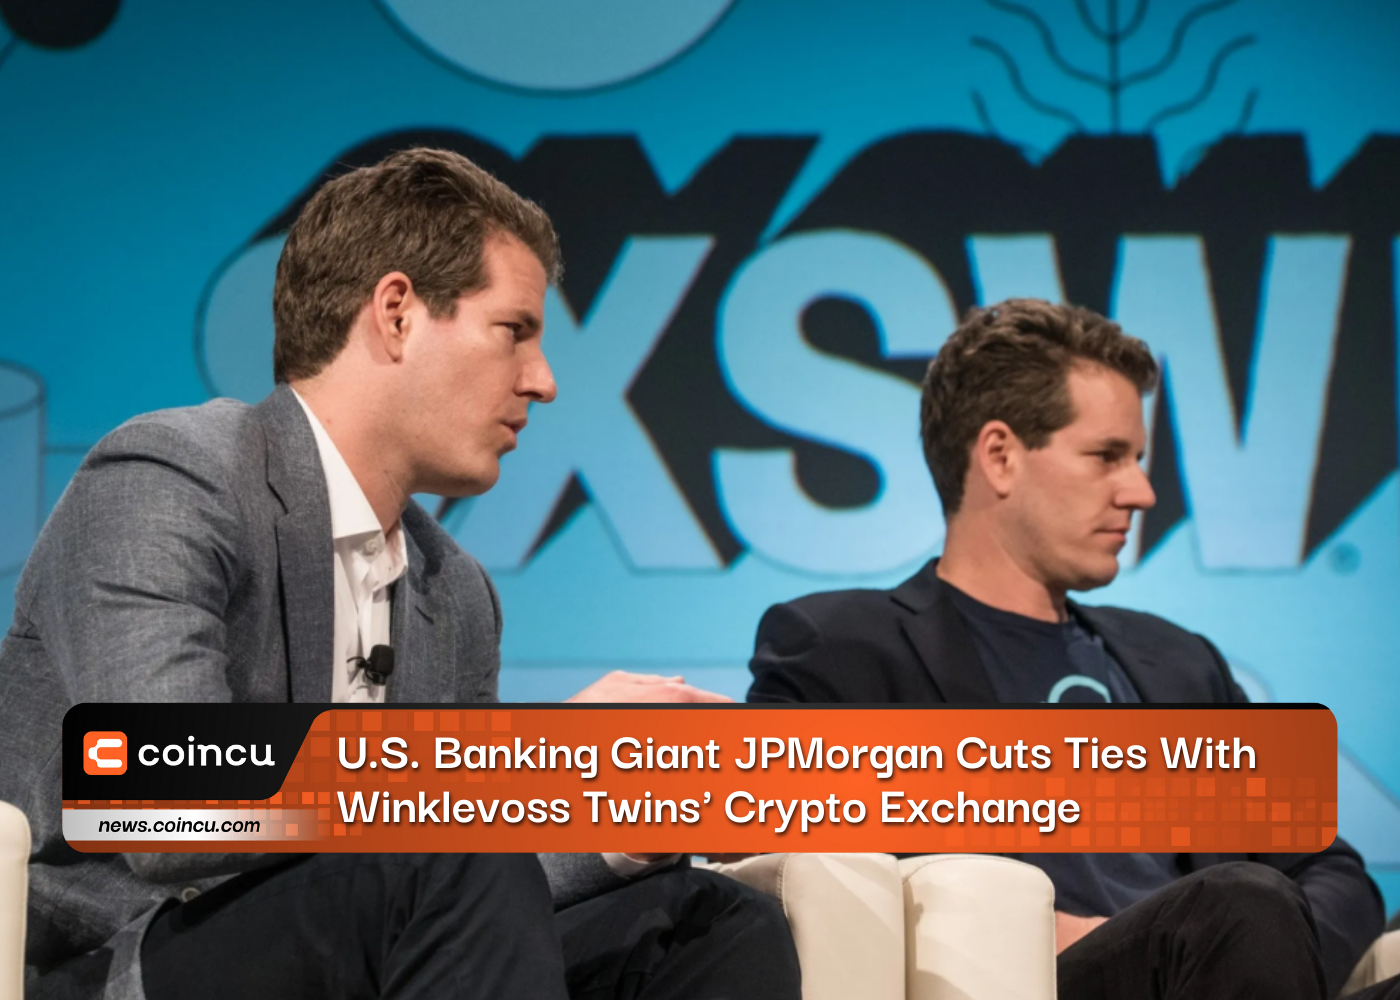 U.S. Banking Giant JPMorgan Cuts Ties With Winklevoss Twins' Crypto Exchange